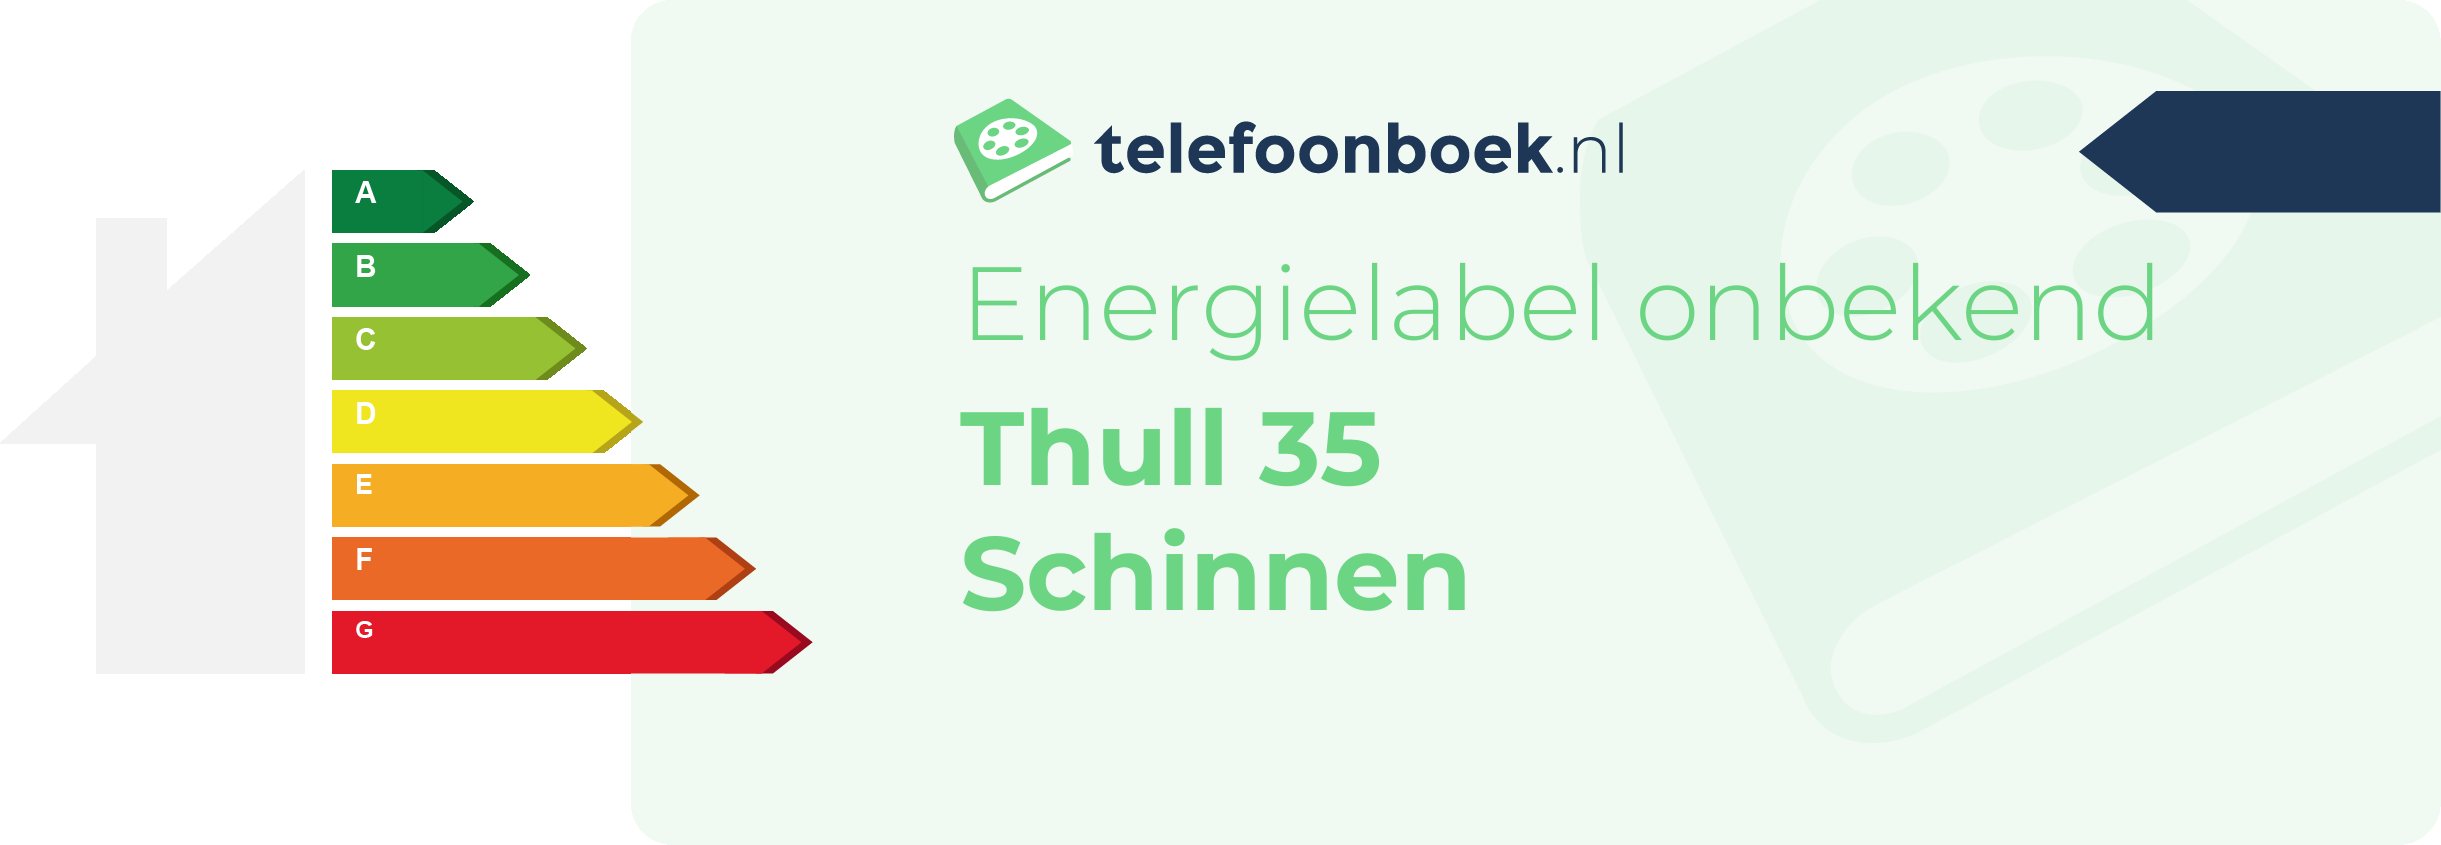 Energielabel Thull 35 Schinnen